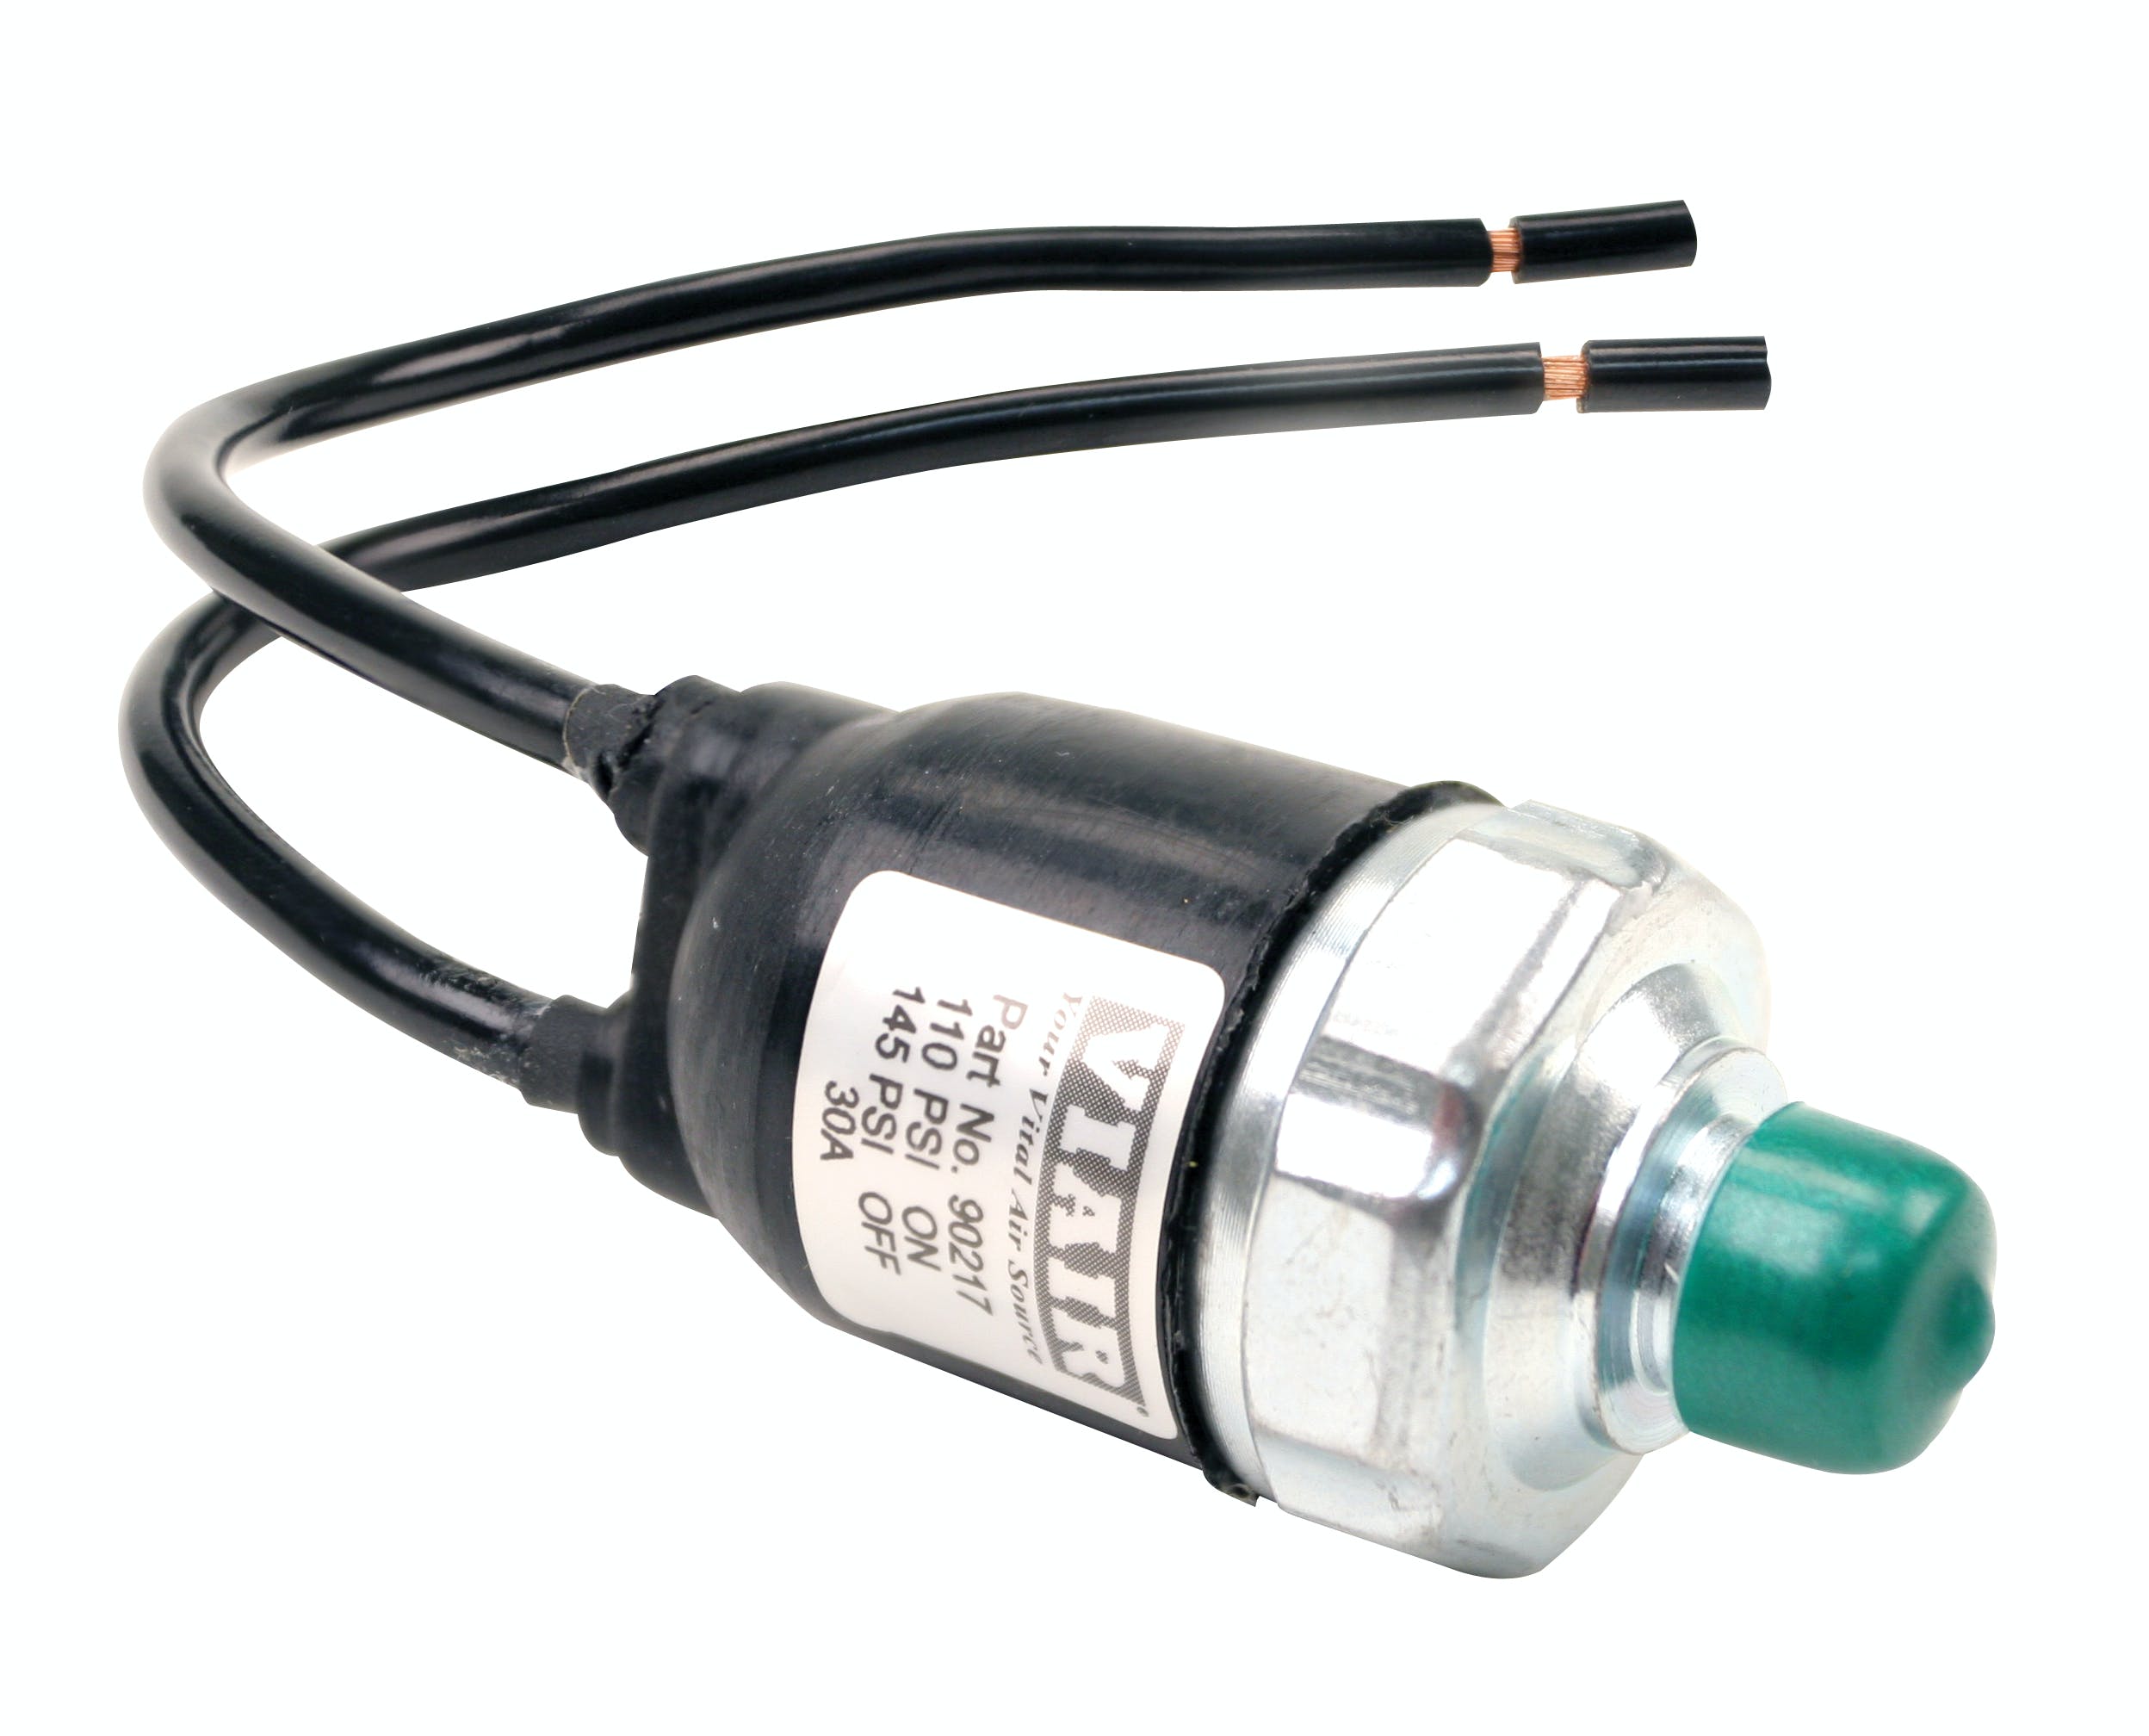 VIAIR 90223 Sealed Pressure Switch  1/8in M NPT Port  12 GA Lead Wires  90 psi On  120